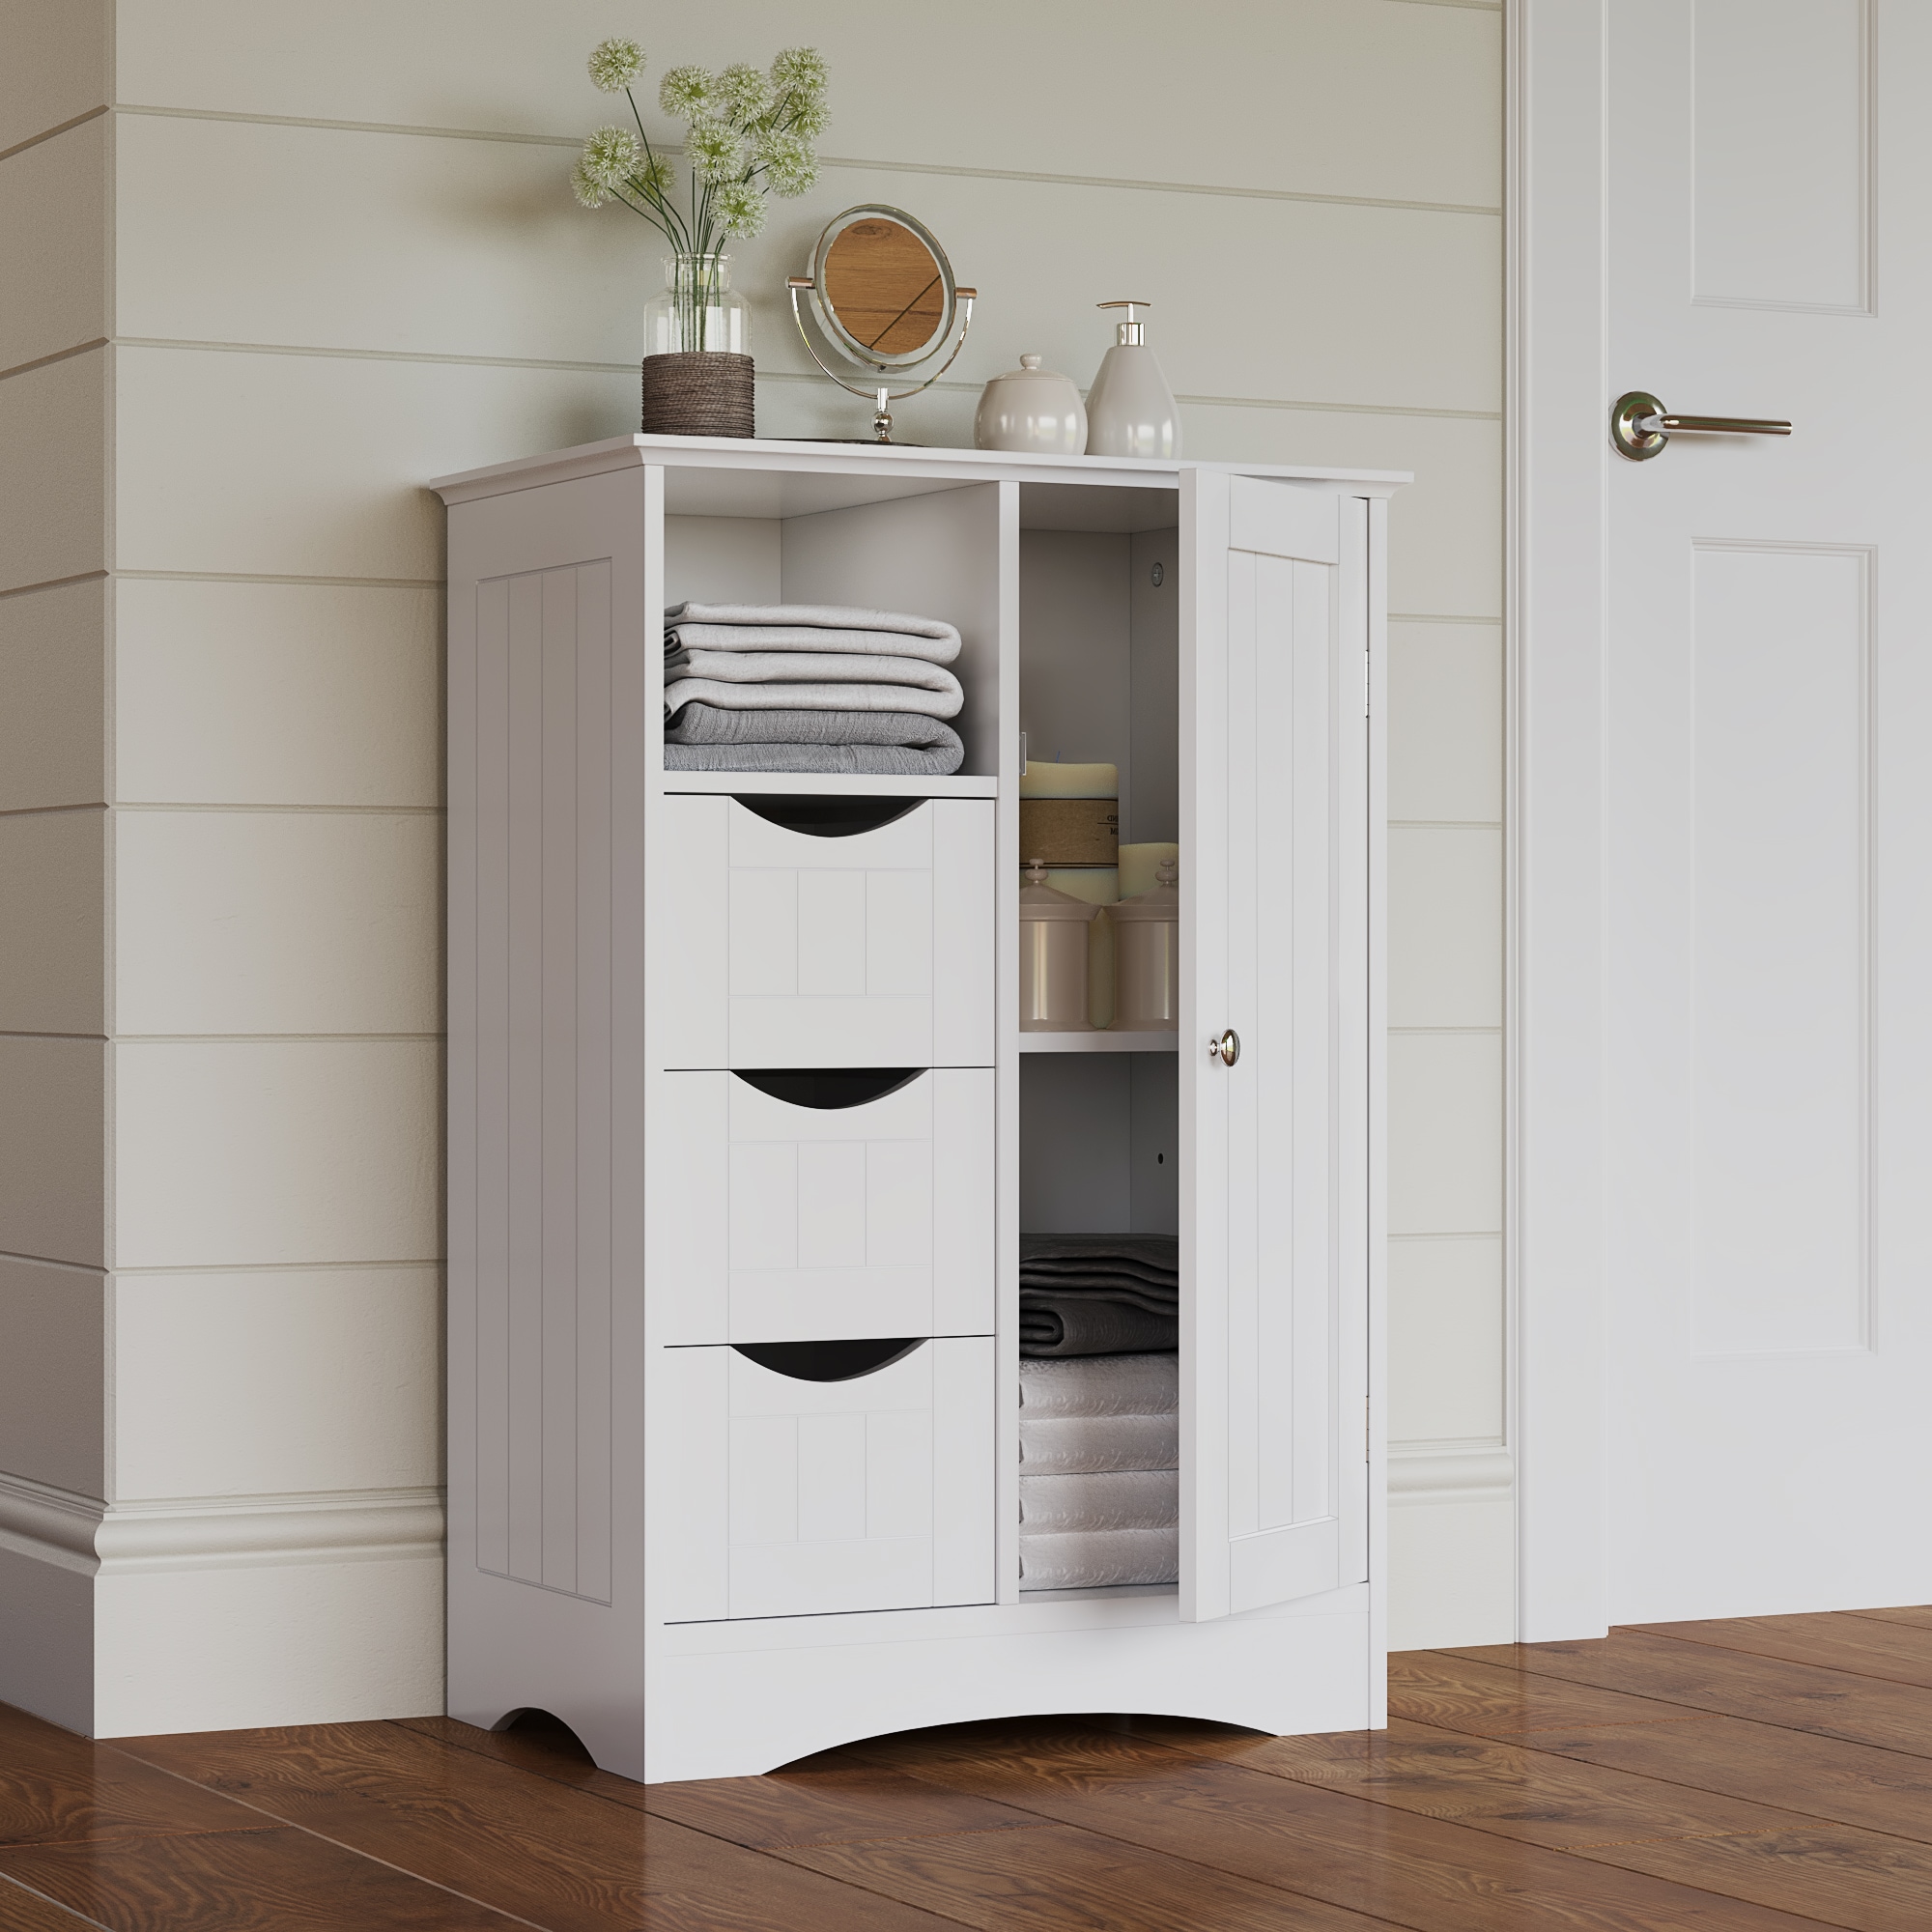 Tangkula Narrow Bathroom Storage Cabinet Freestanding Side Storage  Organizer with Adjustable Shelves Drawer and Pine Wood Legs Black